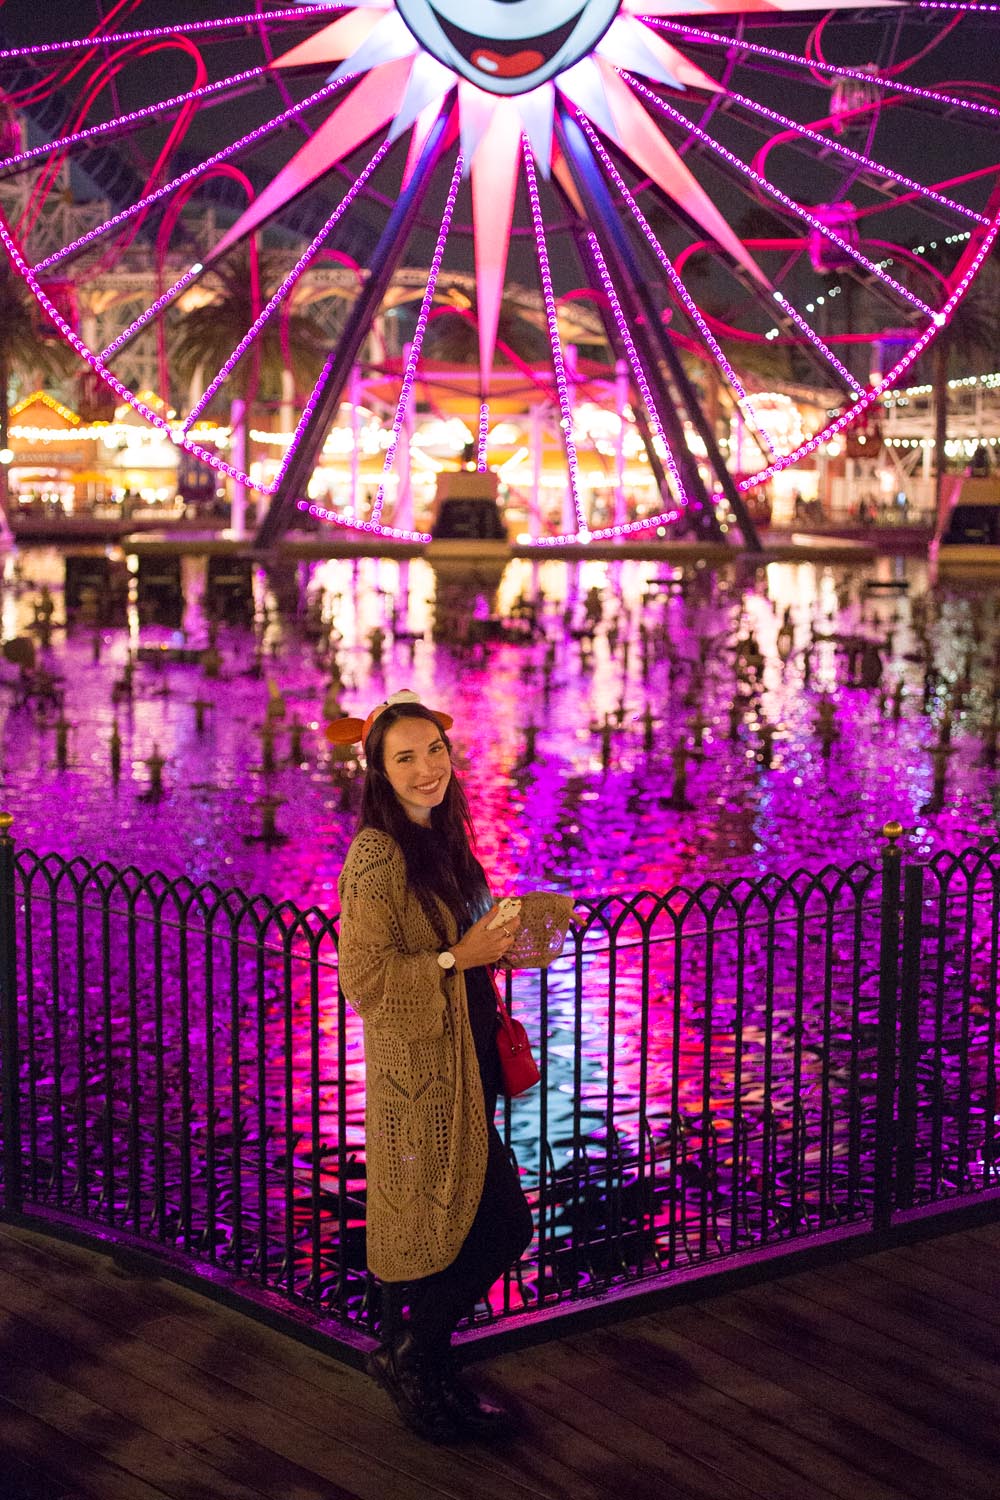 Disneyland's California Adventure Mickeys Fun Wheel at Nightime